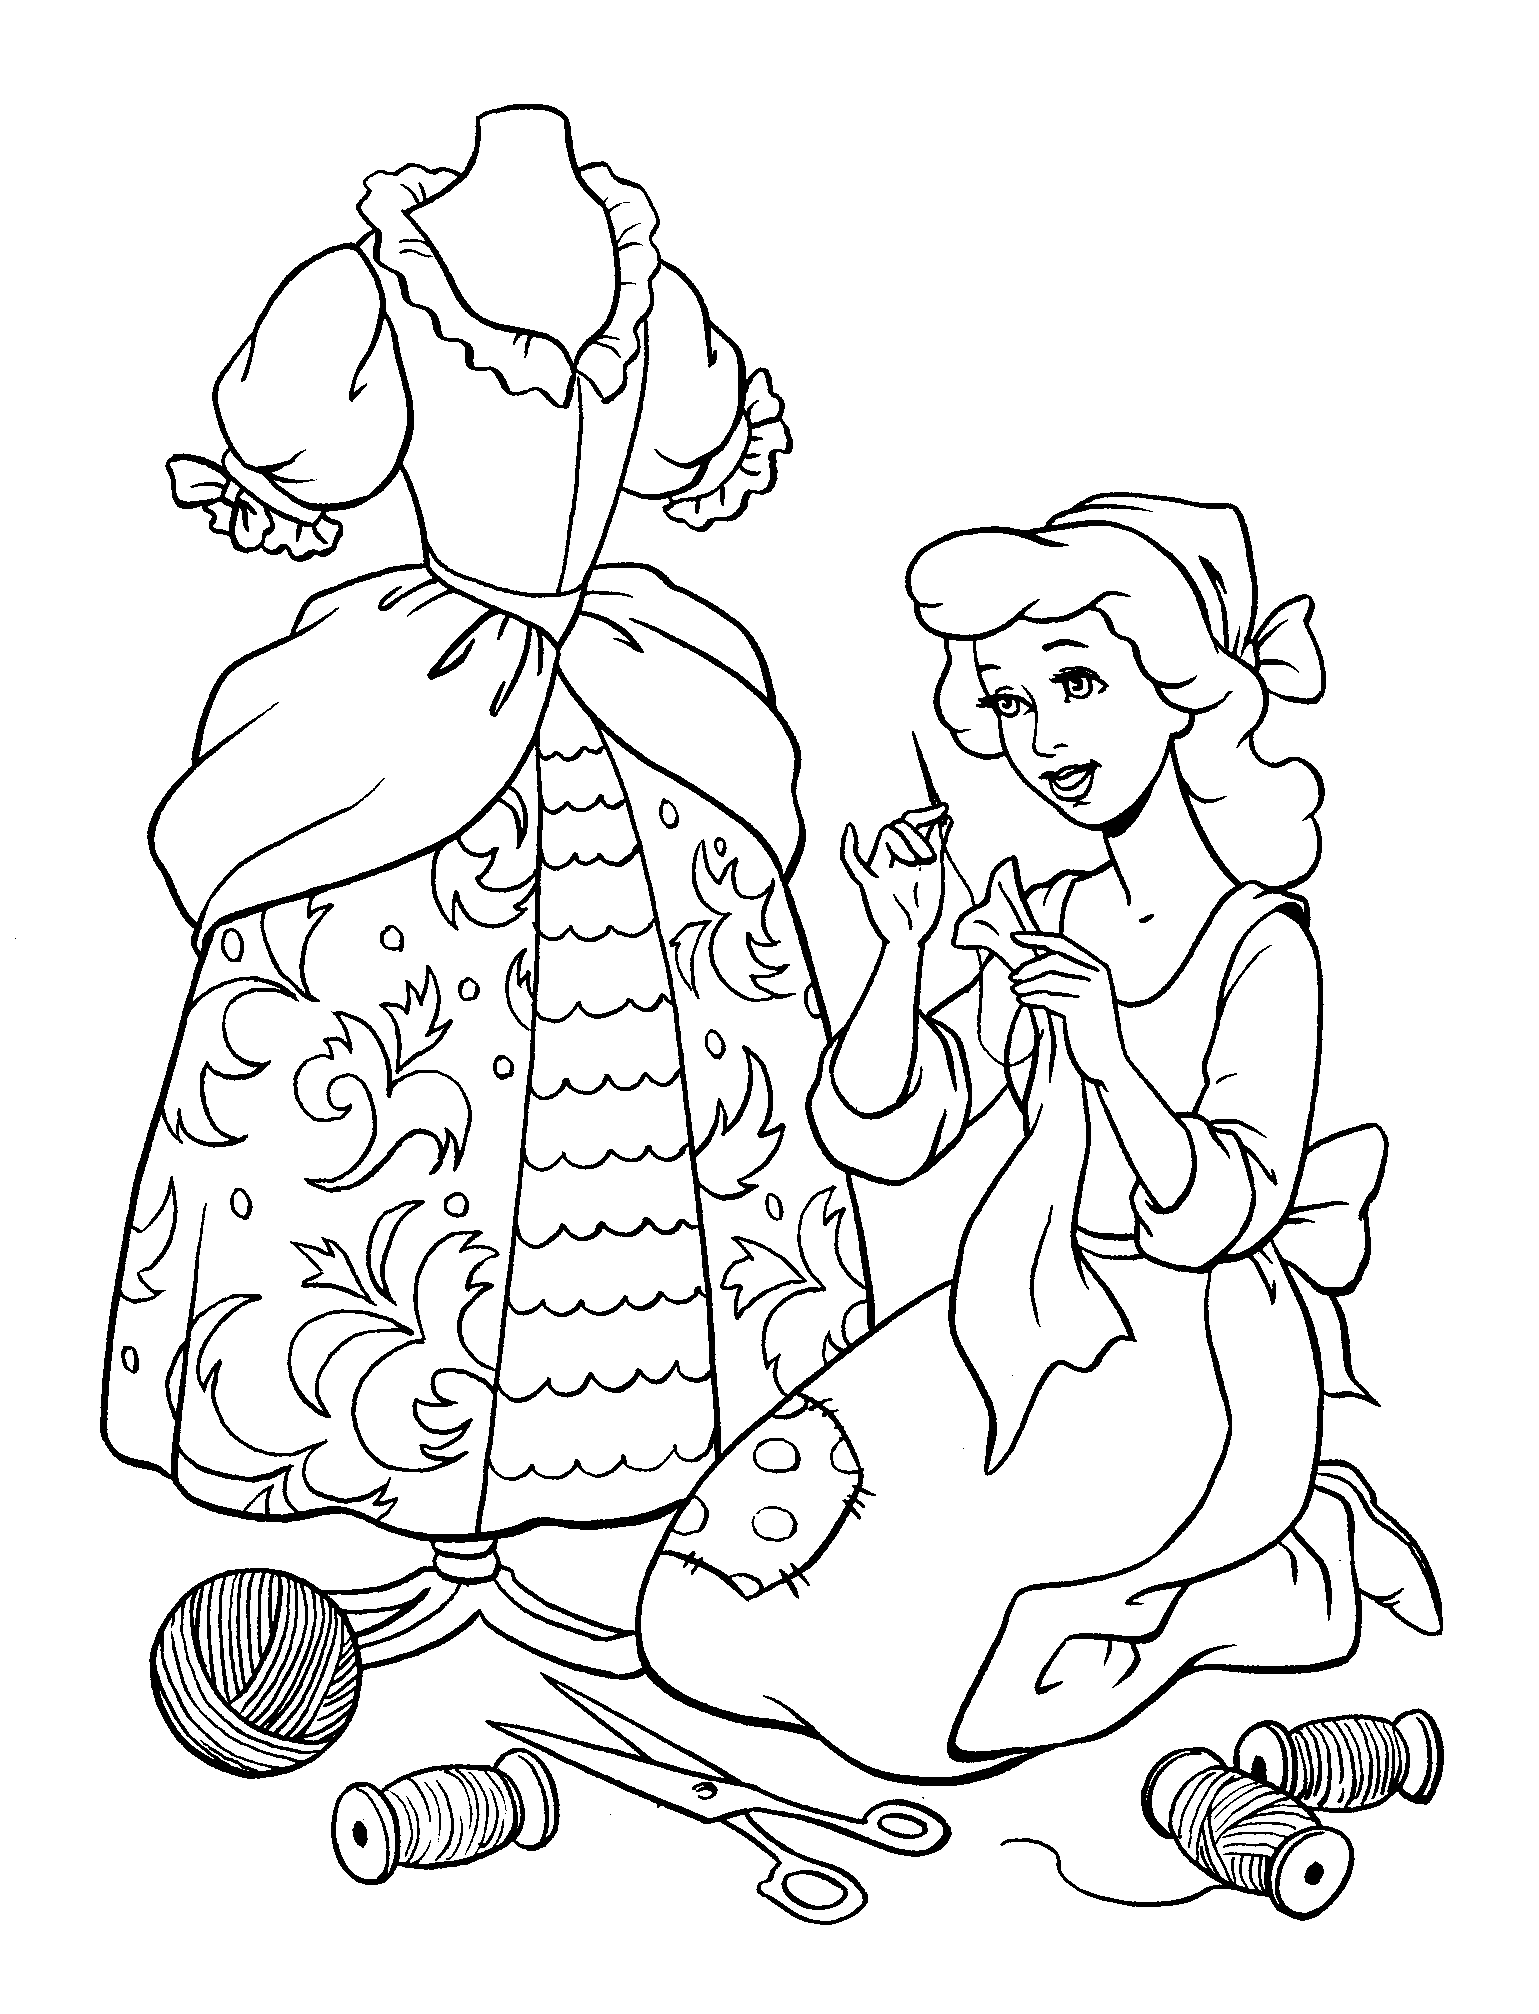 Coloring page - Cinderella dress sews